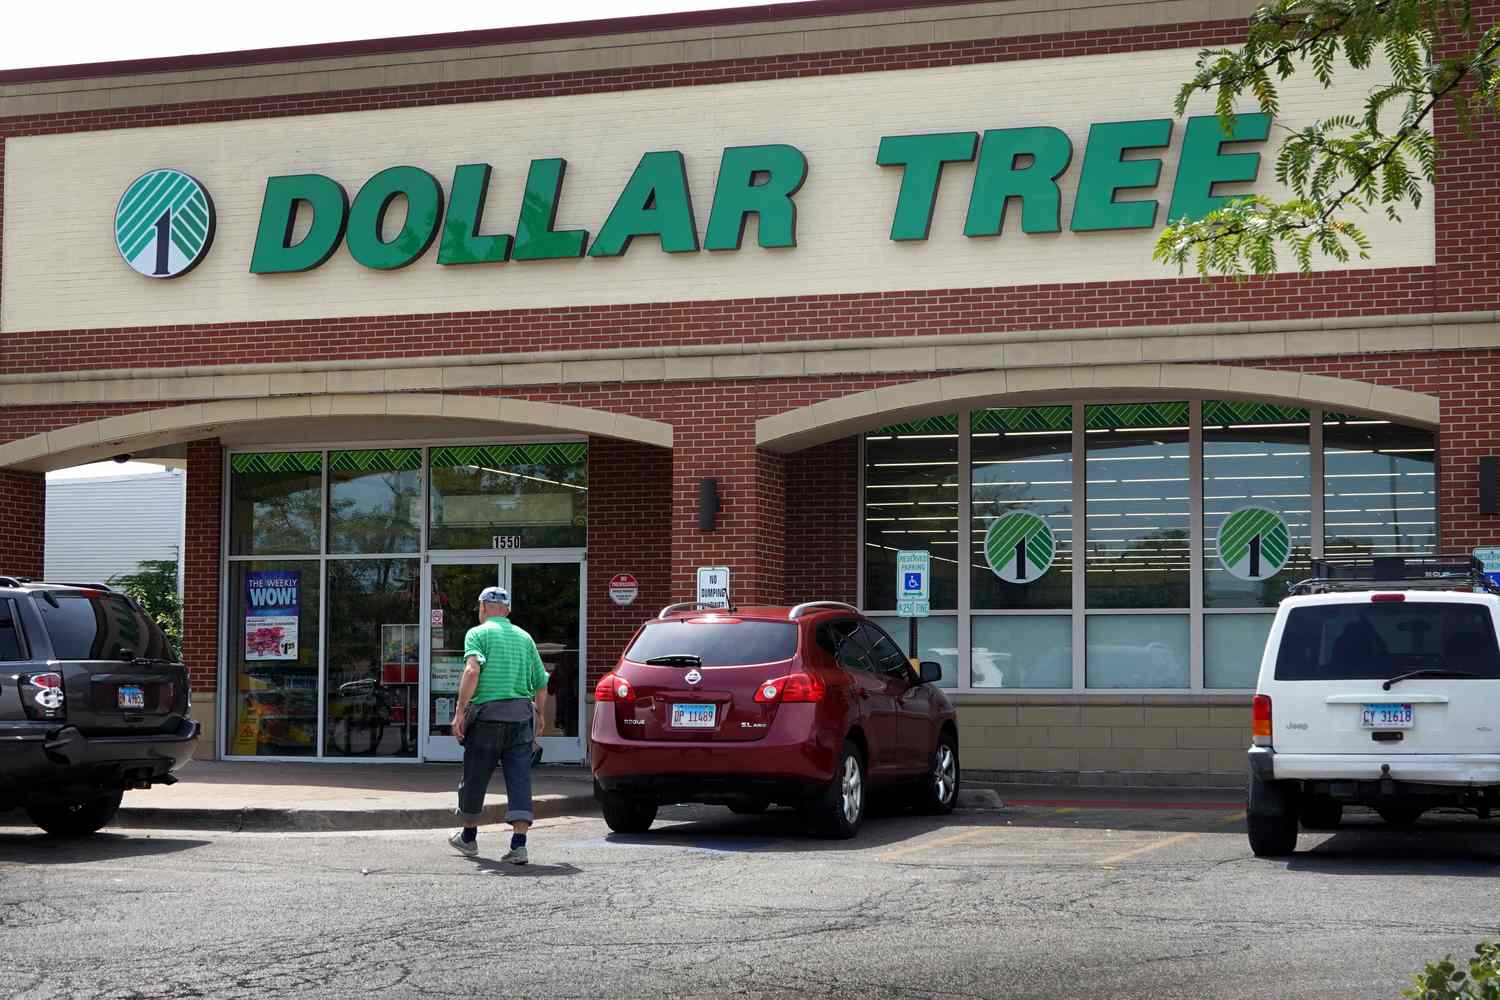 Dollartreefeedback - Win $1000 Dollar - Dollar Tree Survey 